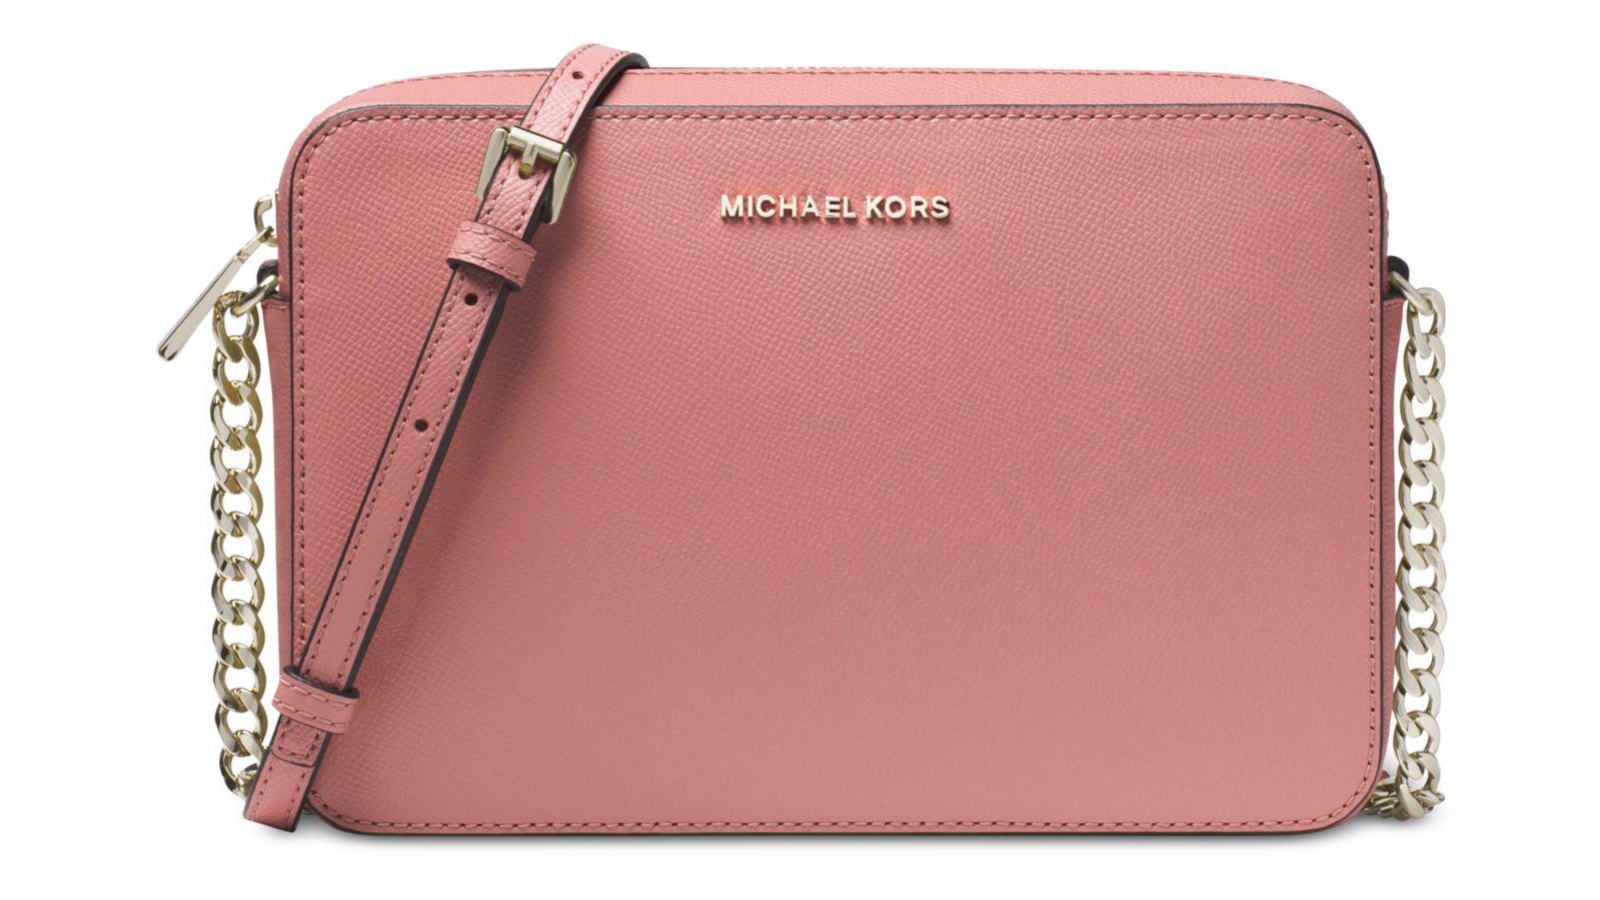 Michael Kors Ladies Red Jade Small Leather Crossbody Bag